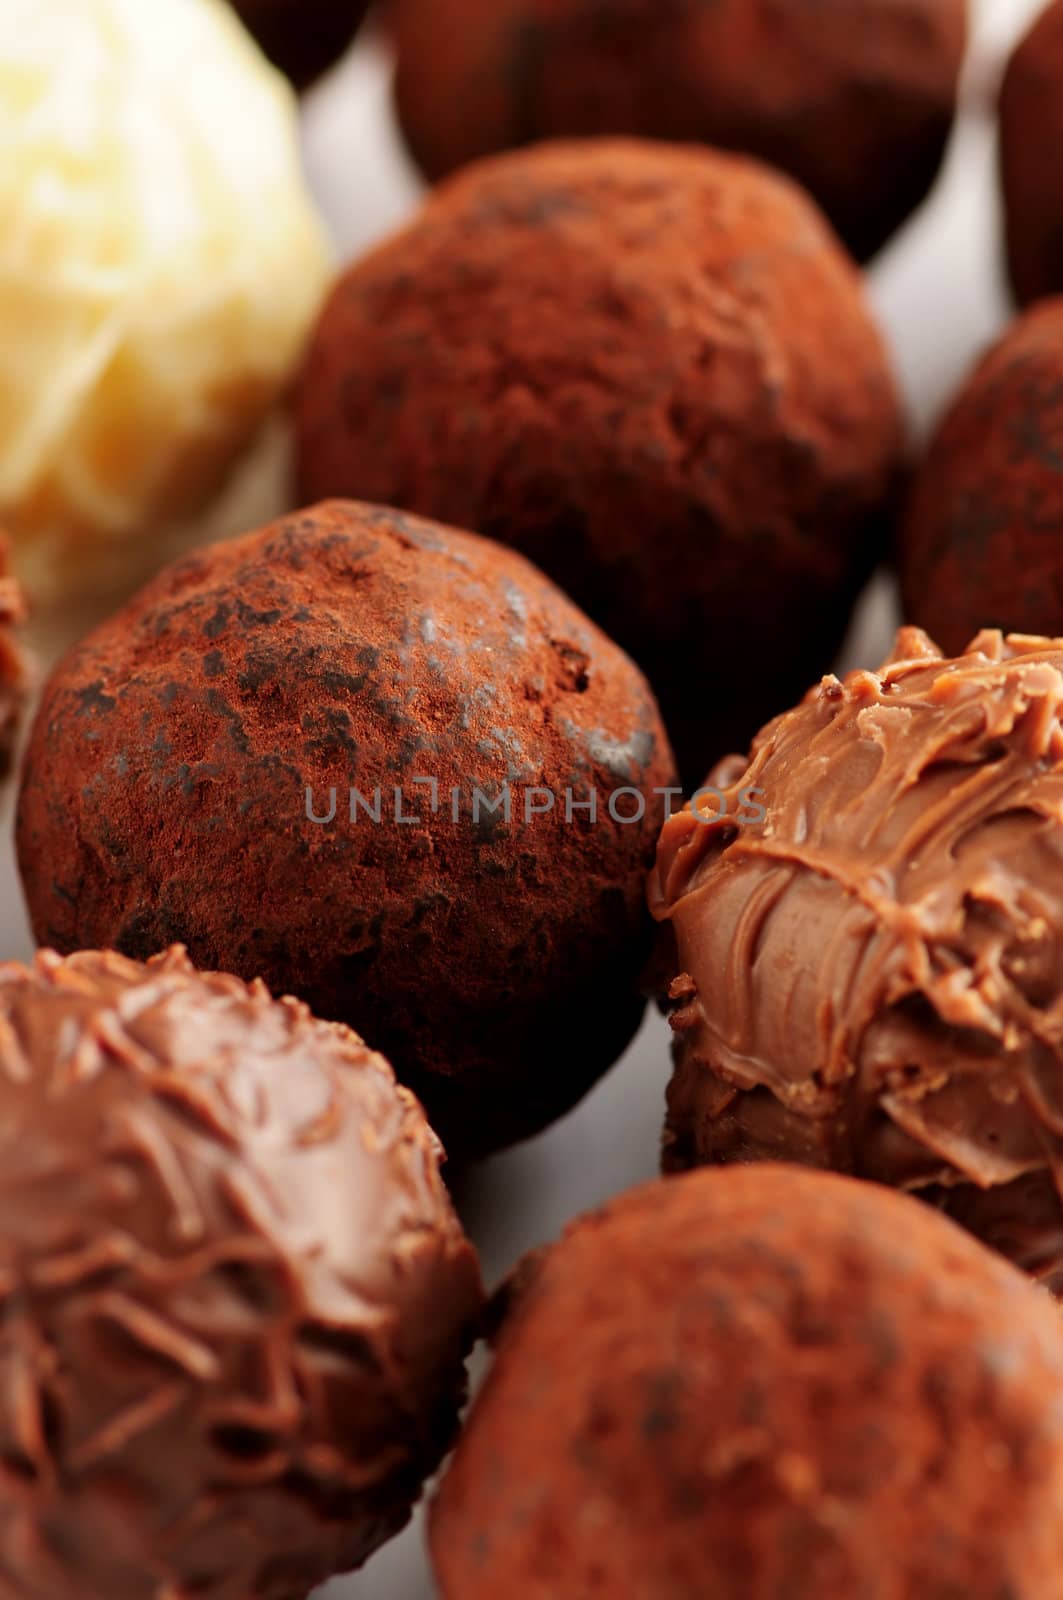 Chocolate truffles by elenathewise